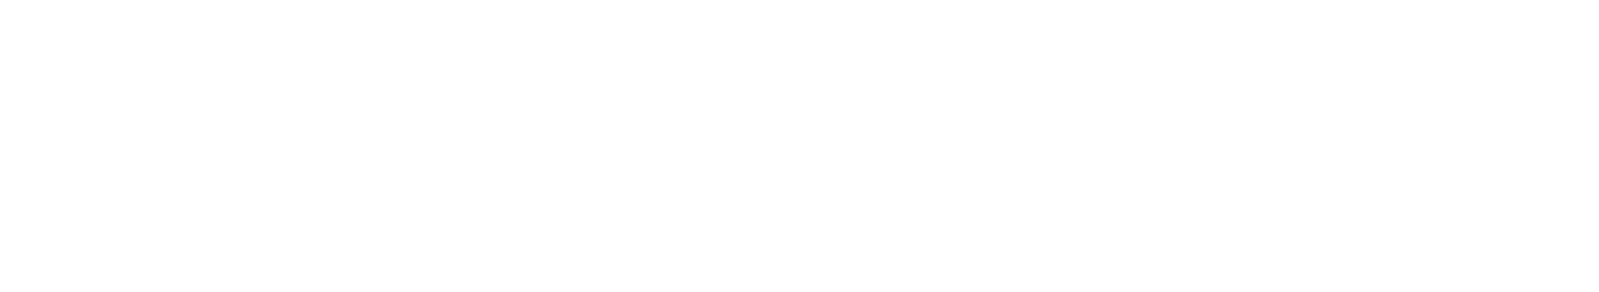 Petro Rio logo grand pour les fonds sombres (PNG transparent)